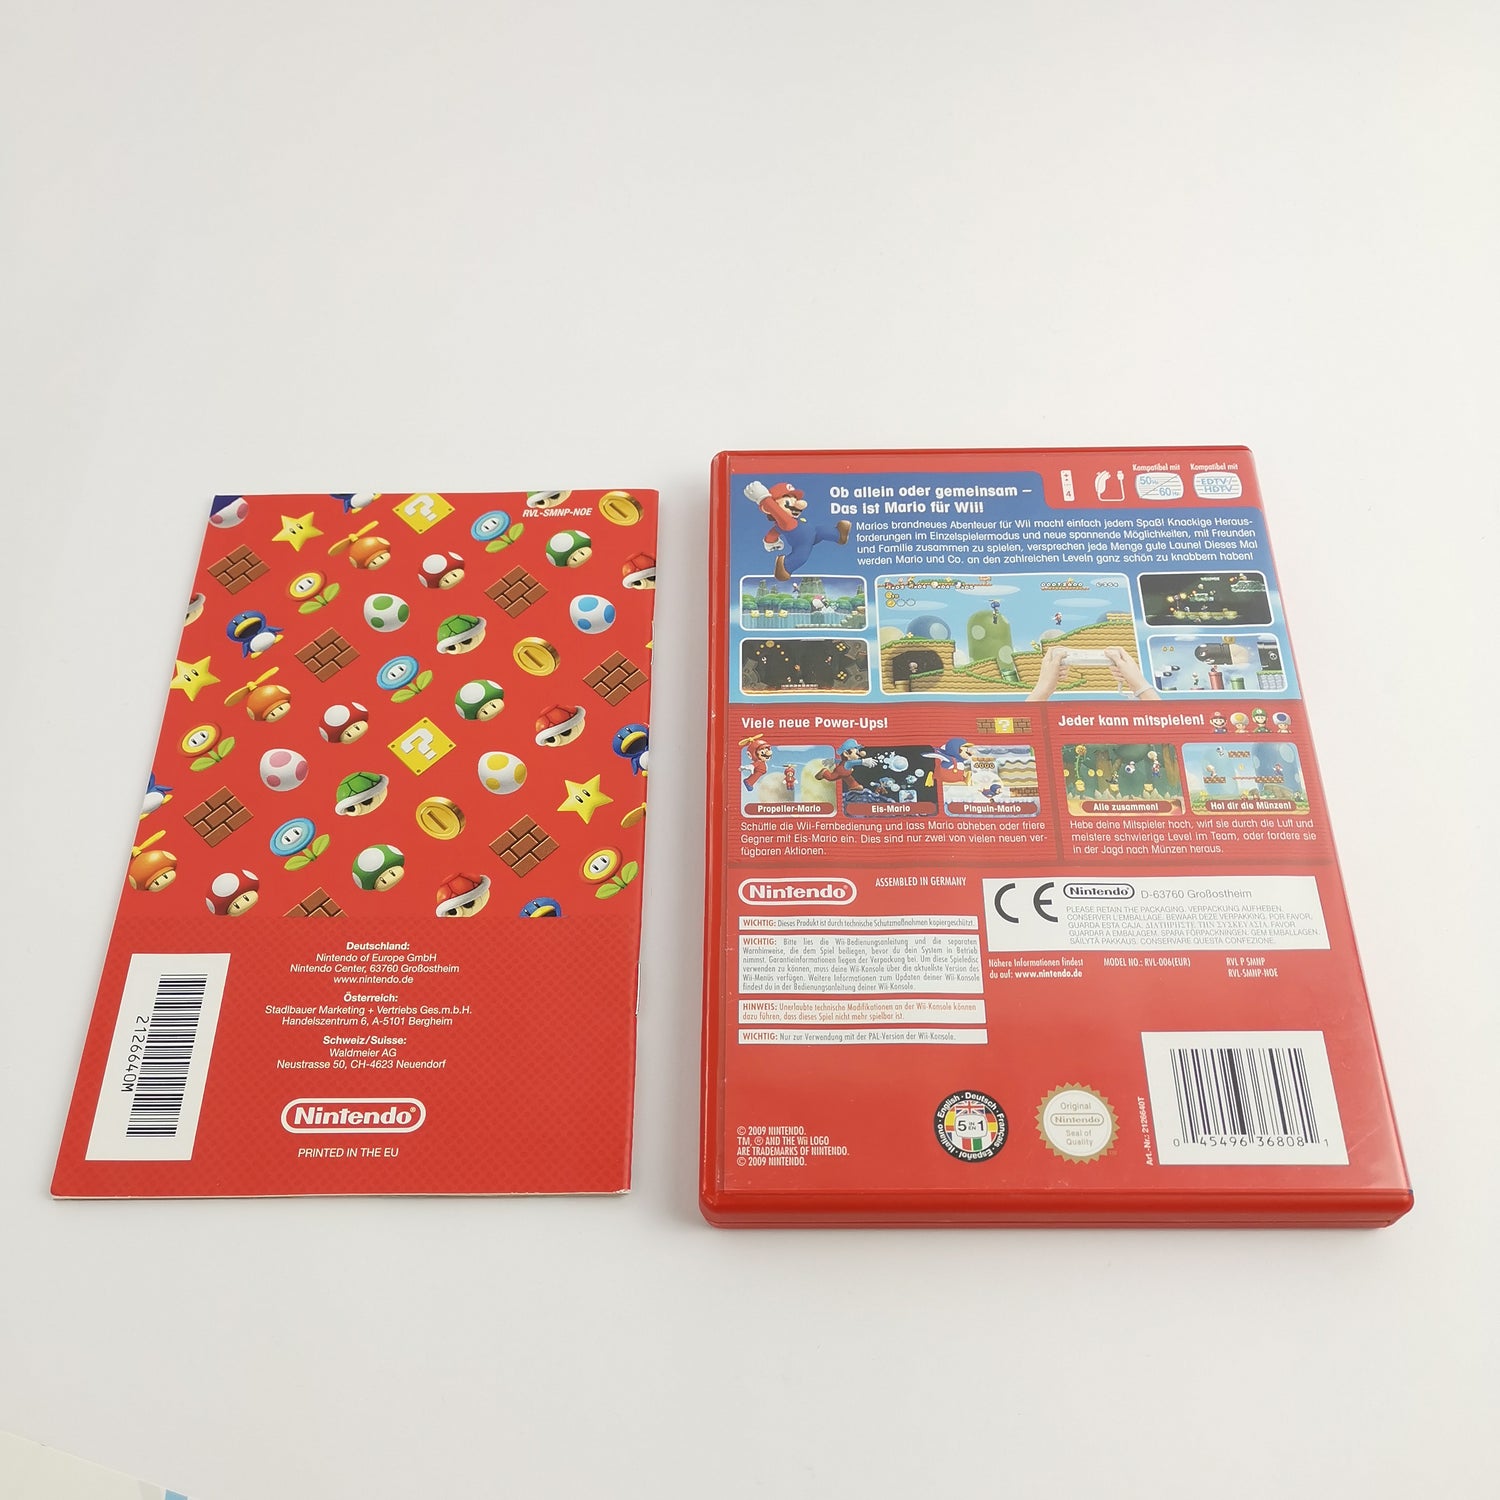 Nintendo Wii Game: New Super Mario Bros. | Wii & Wii U - German PAL version orig